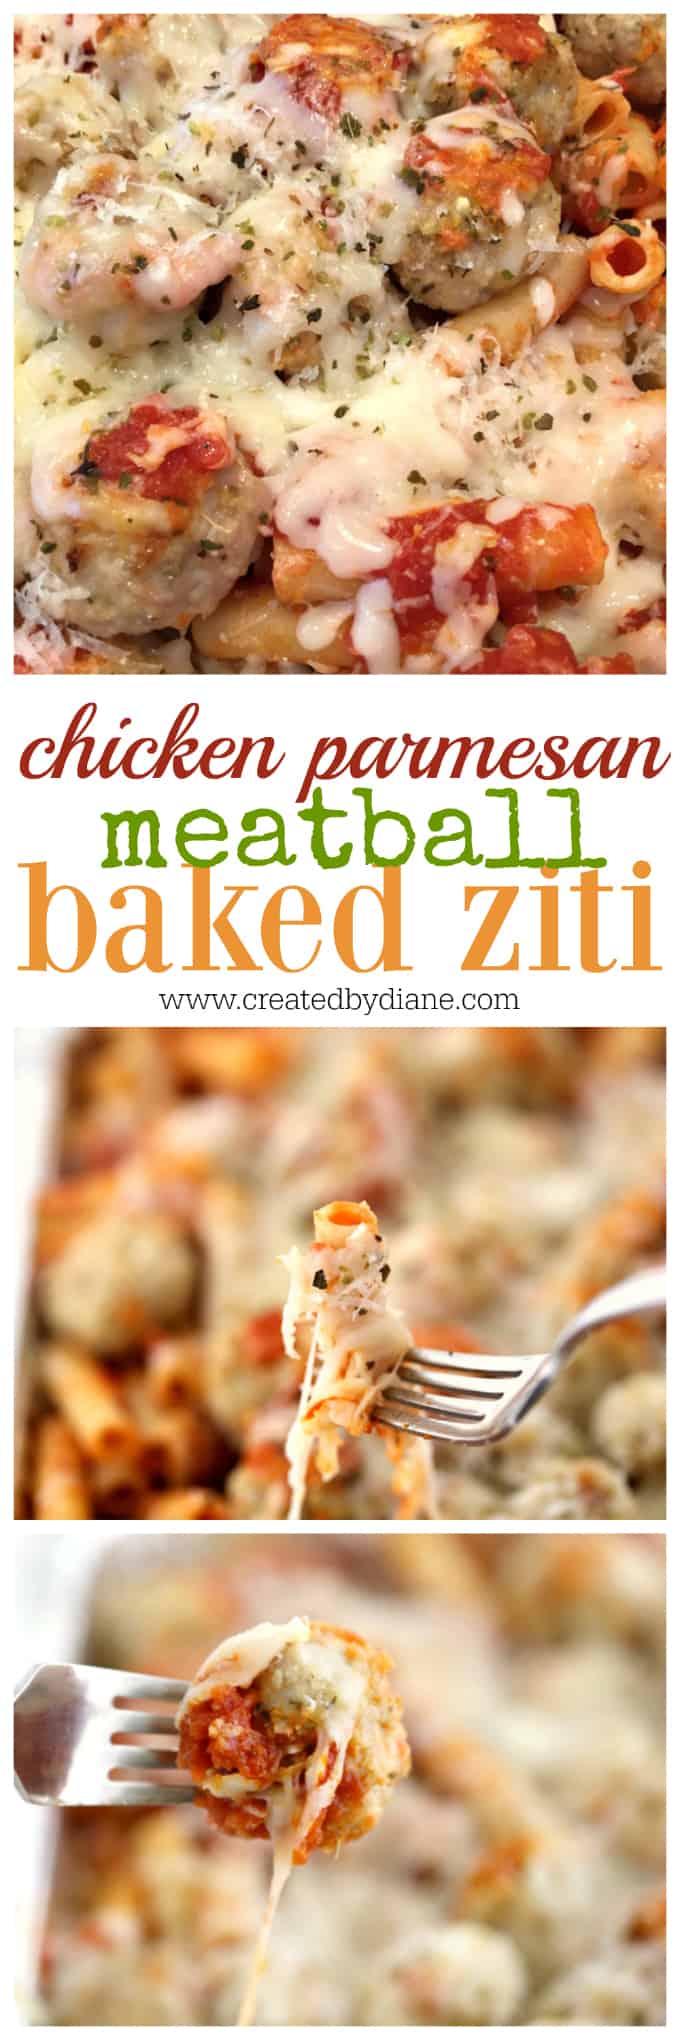 chicken parmesan meatball baked ziti recipe www.createdbydiane.com